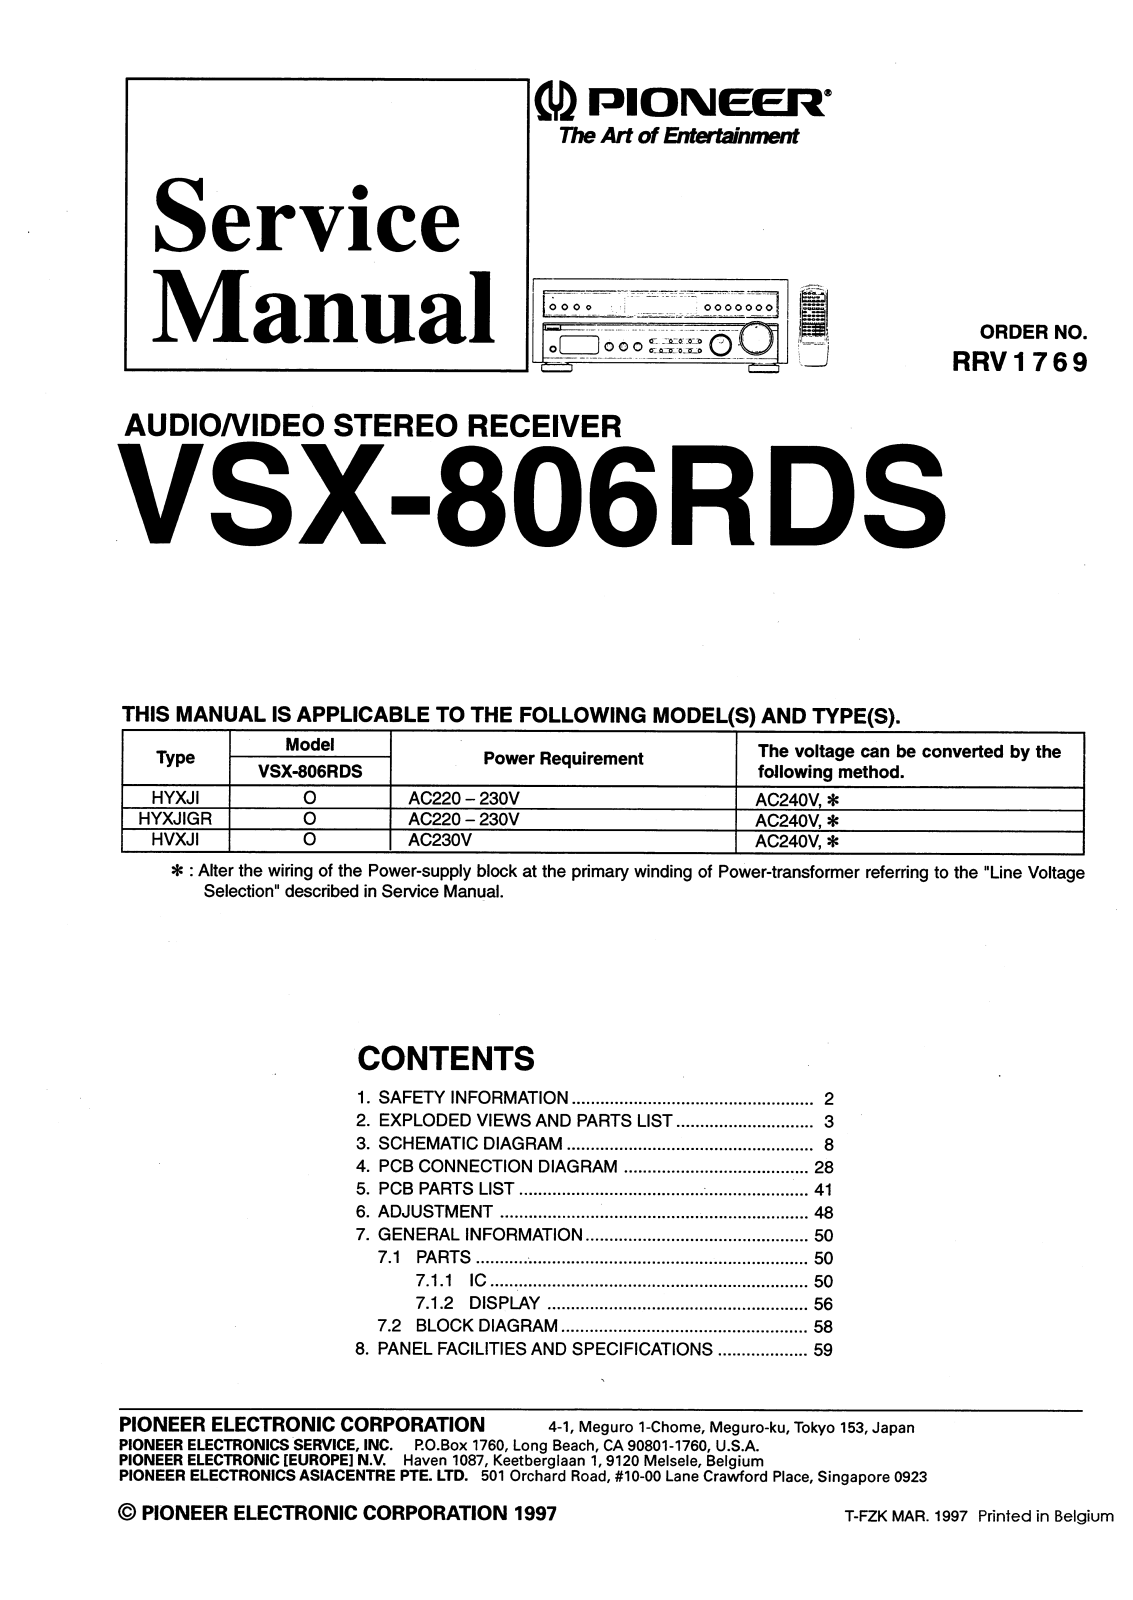 Pioneer VSX-806-RDS Service manual